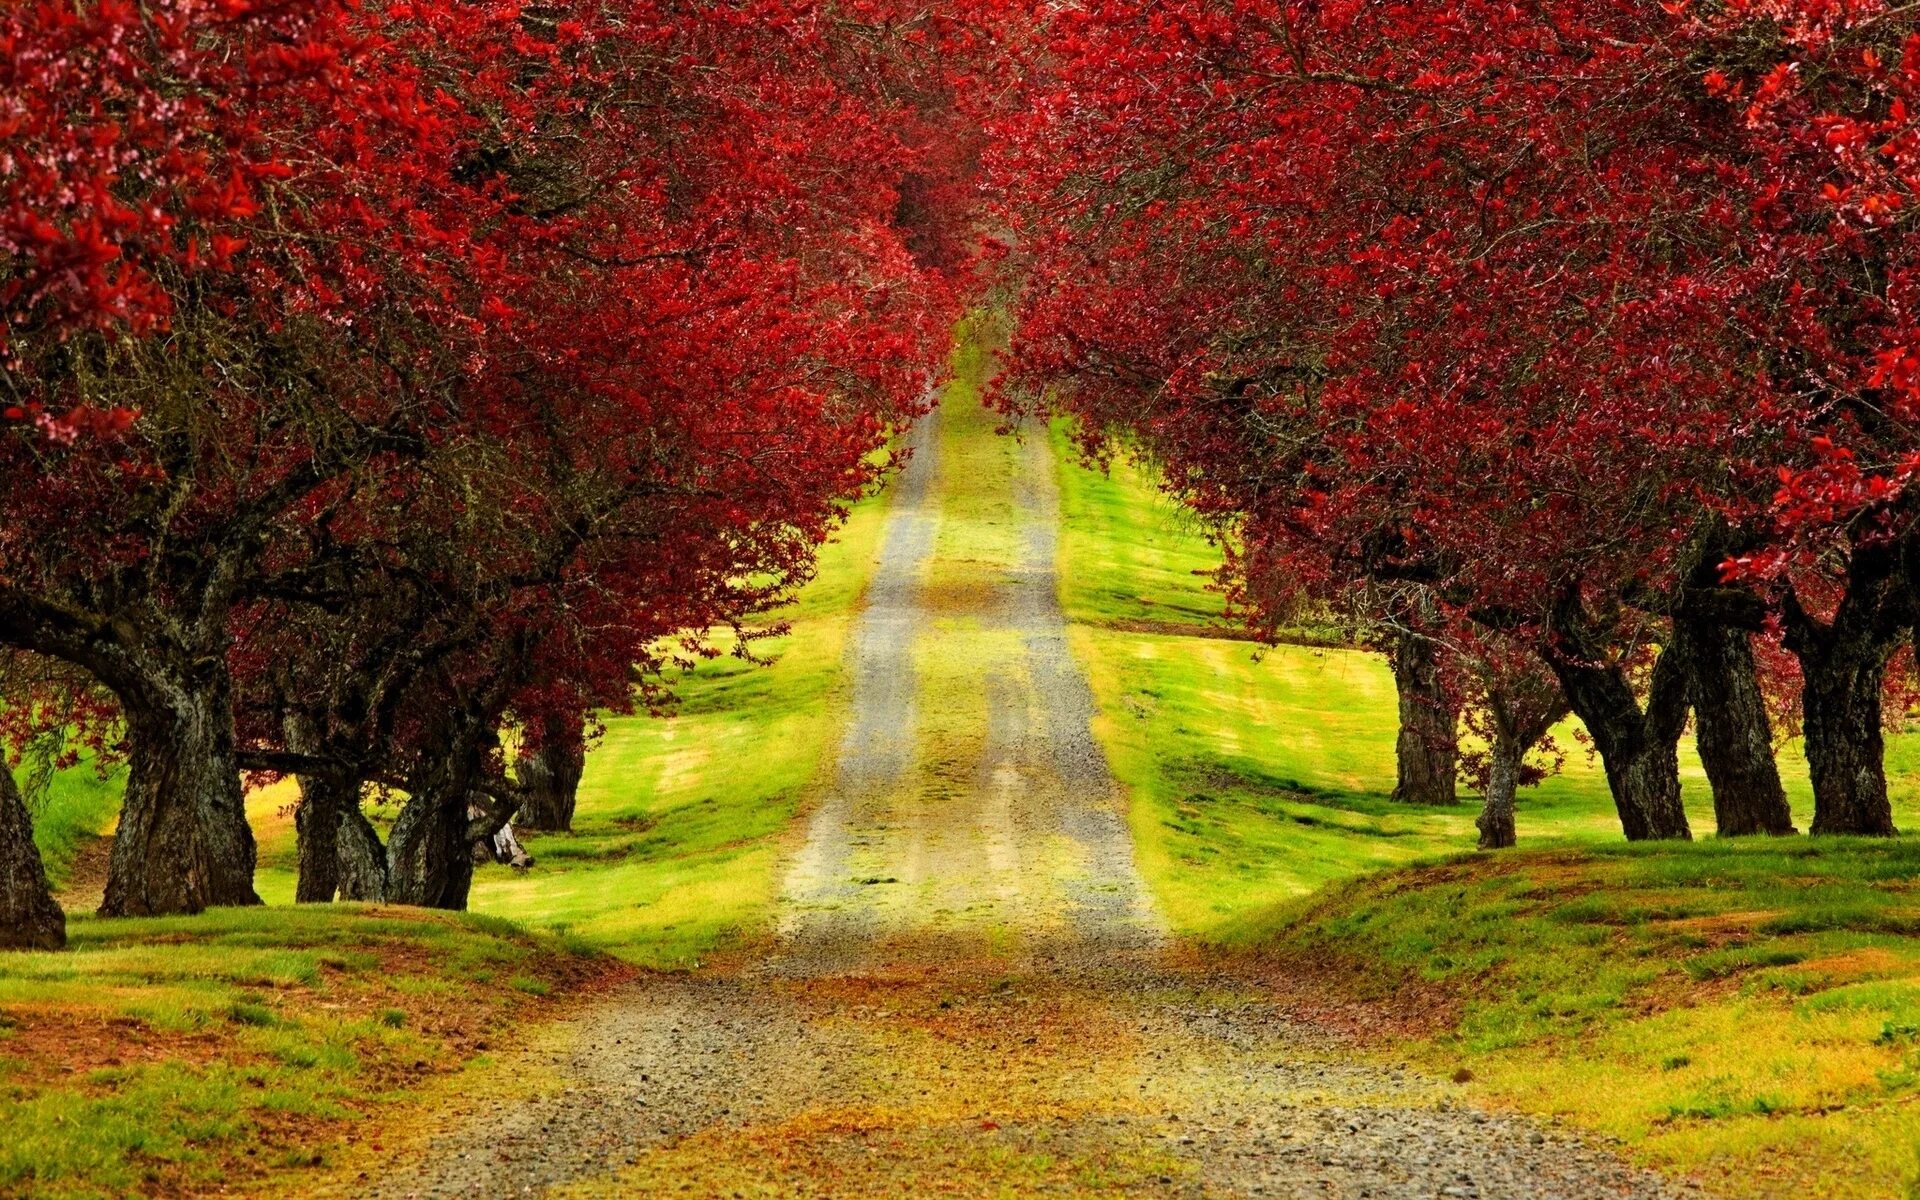 The trees fall across the road. Природа. Природа осень. Красивый пейзаж. Красное дерево.